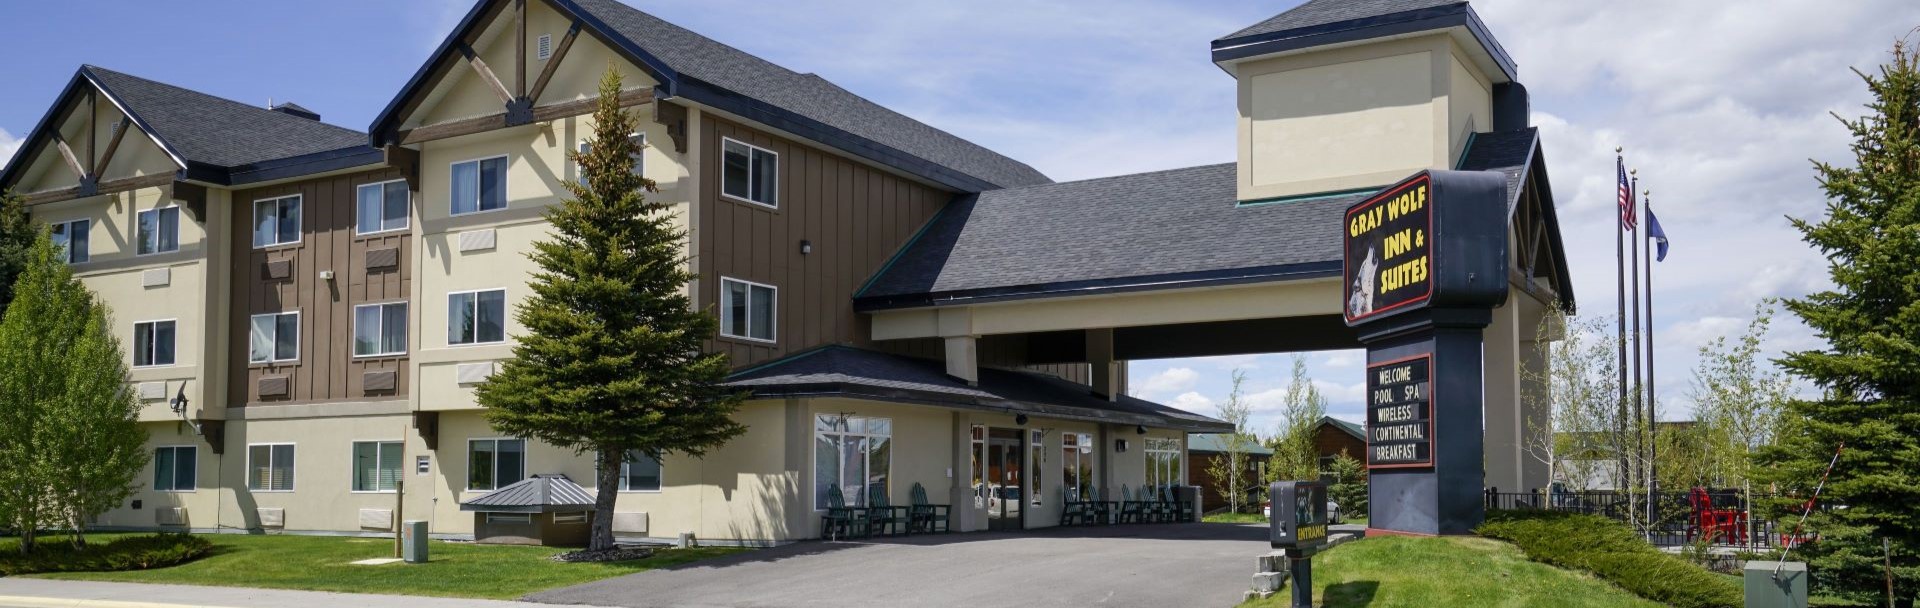 Gray Wolf Inn & Suites, Yellowstone 